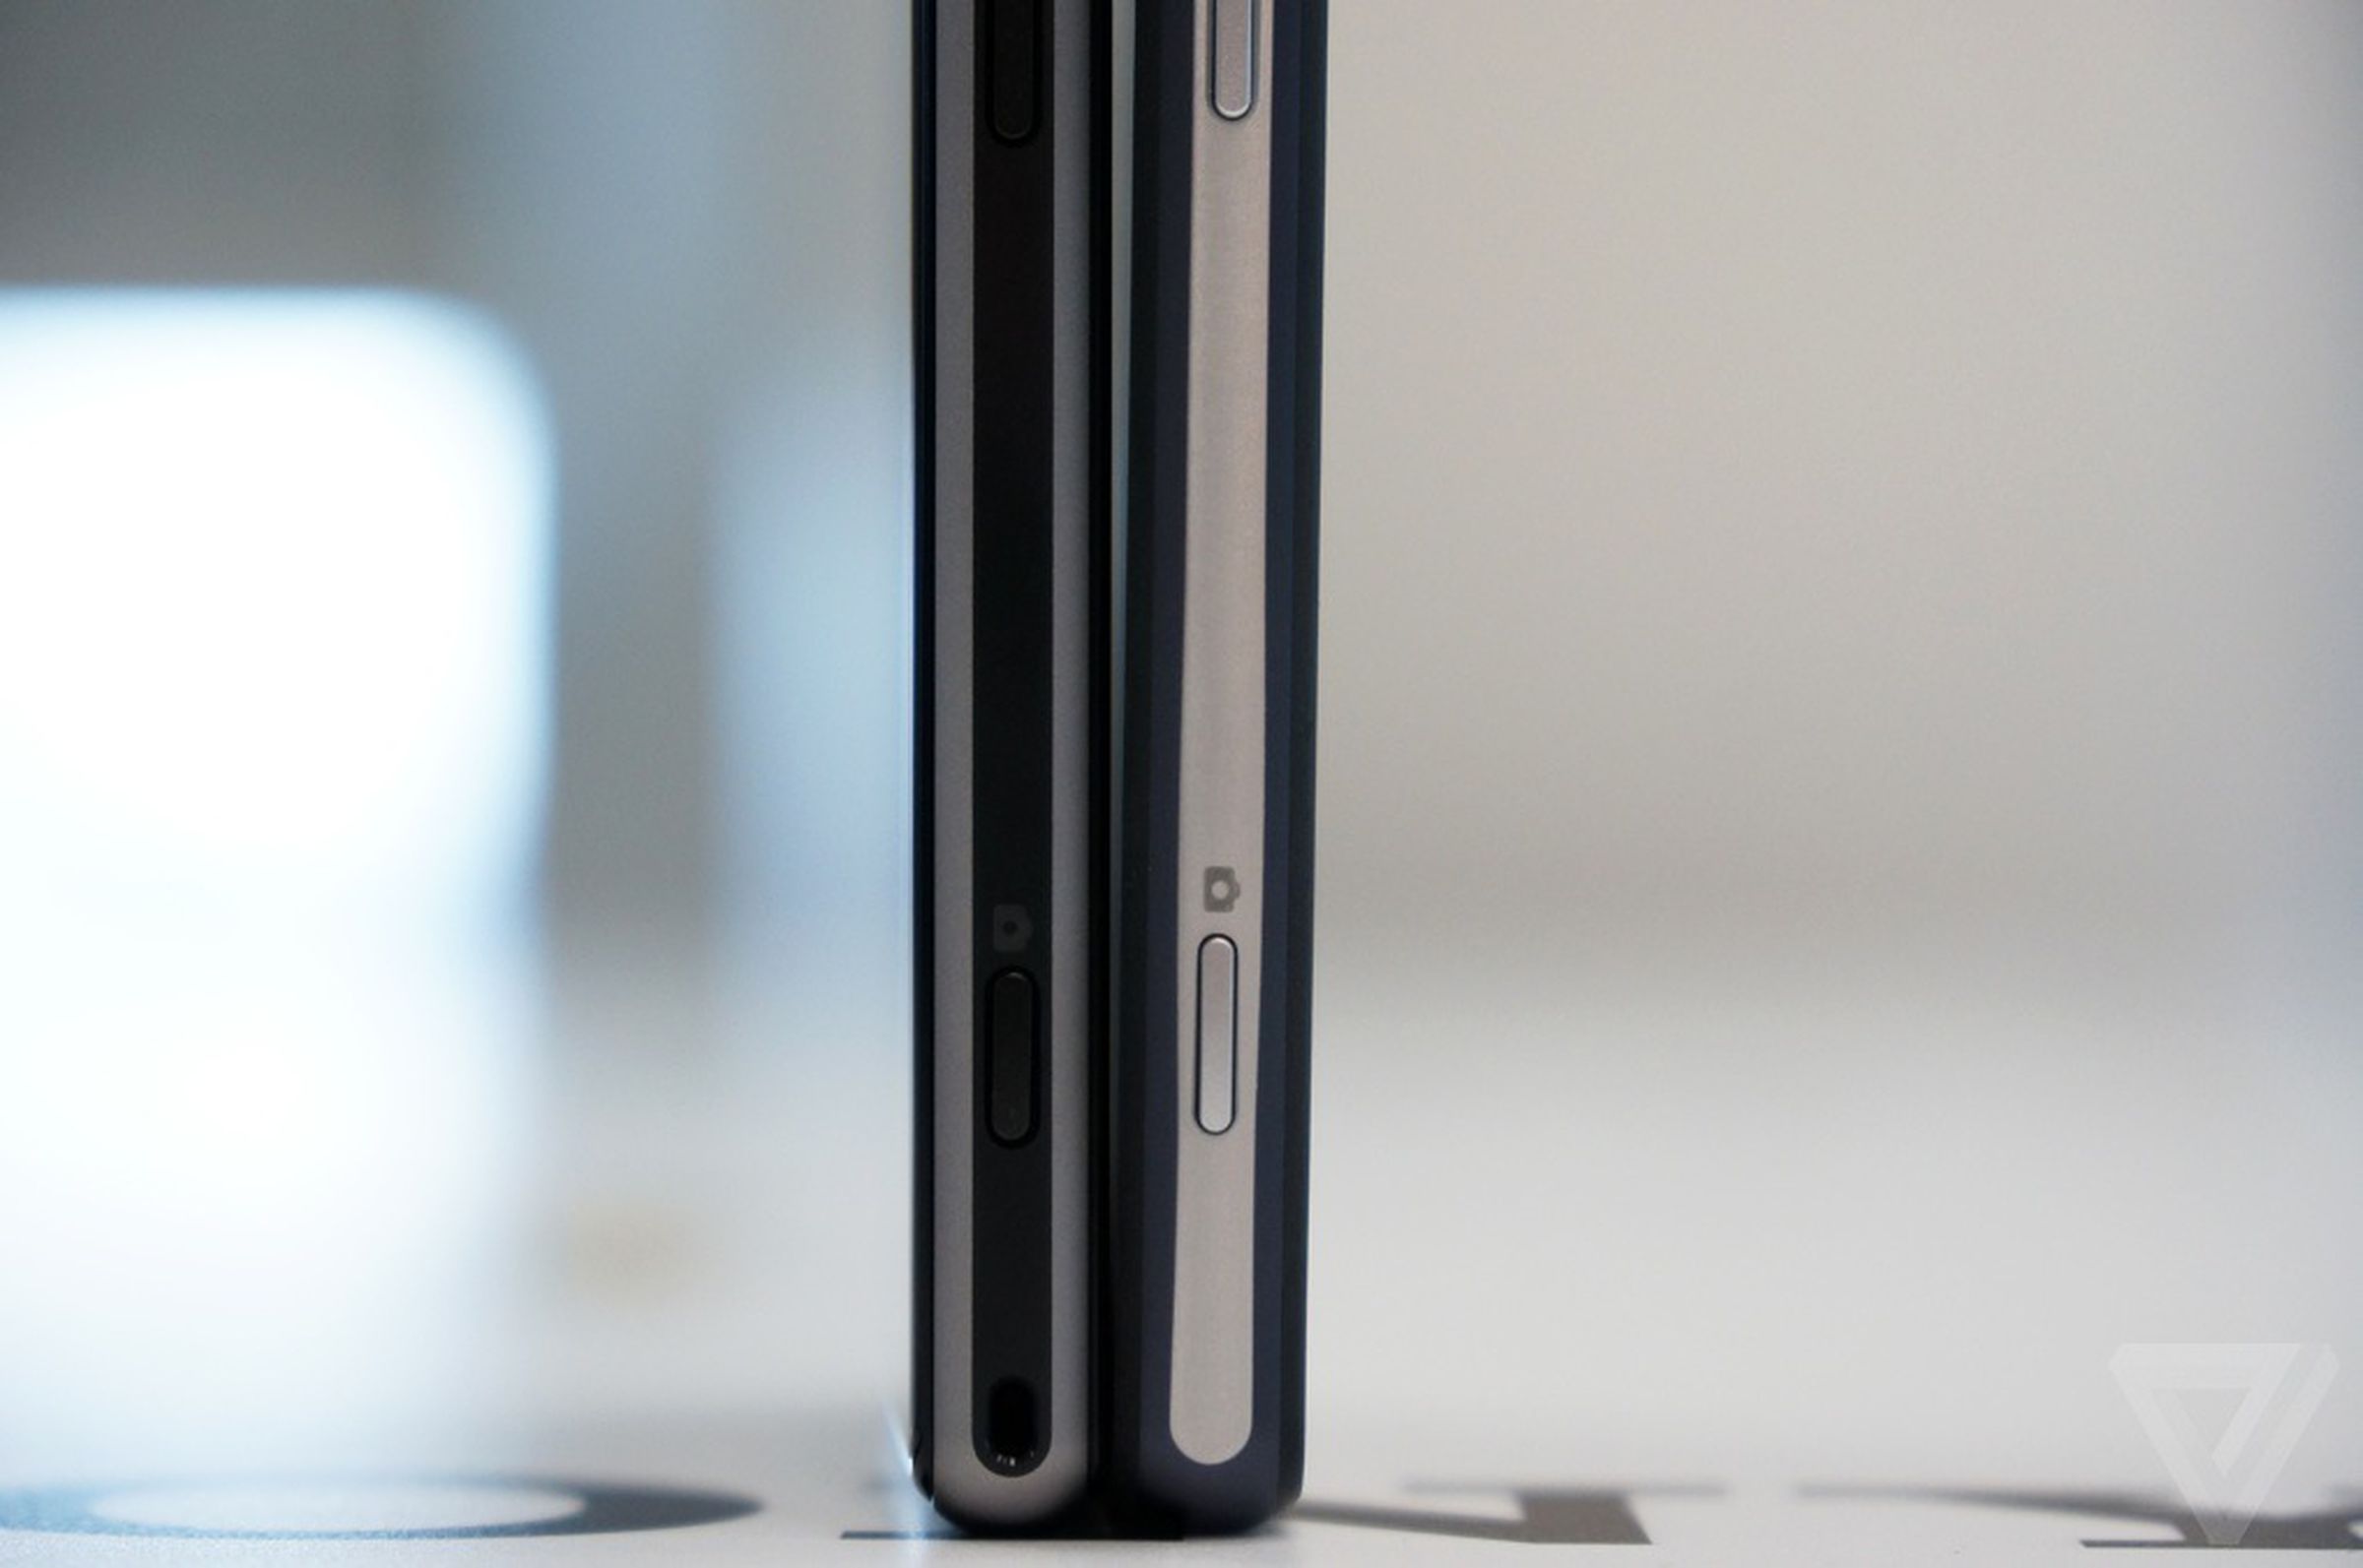 Sony Xperia Z2 hands-on photos